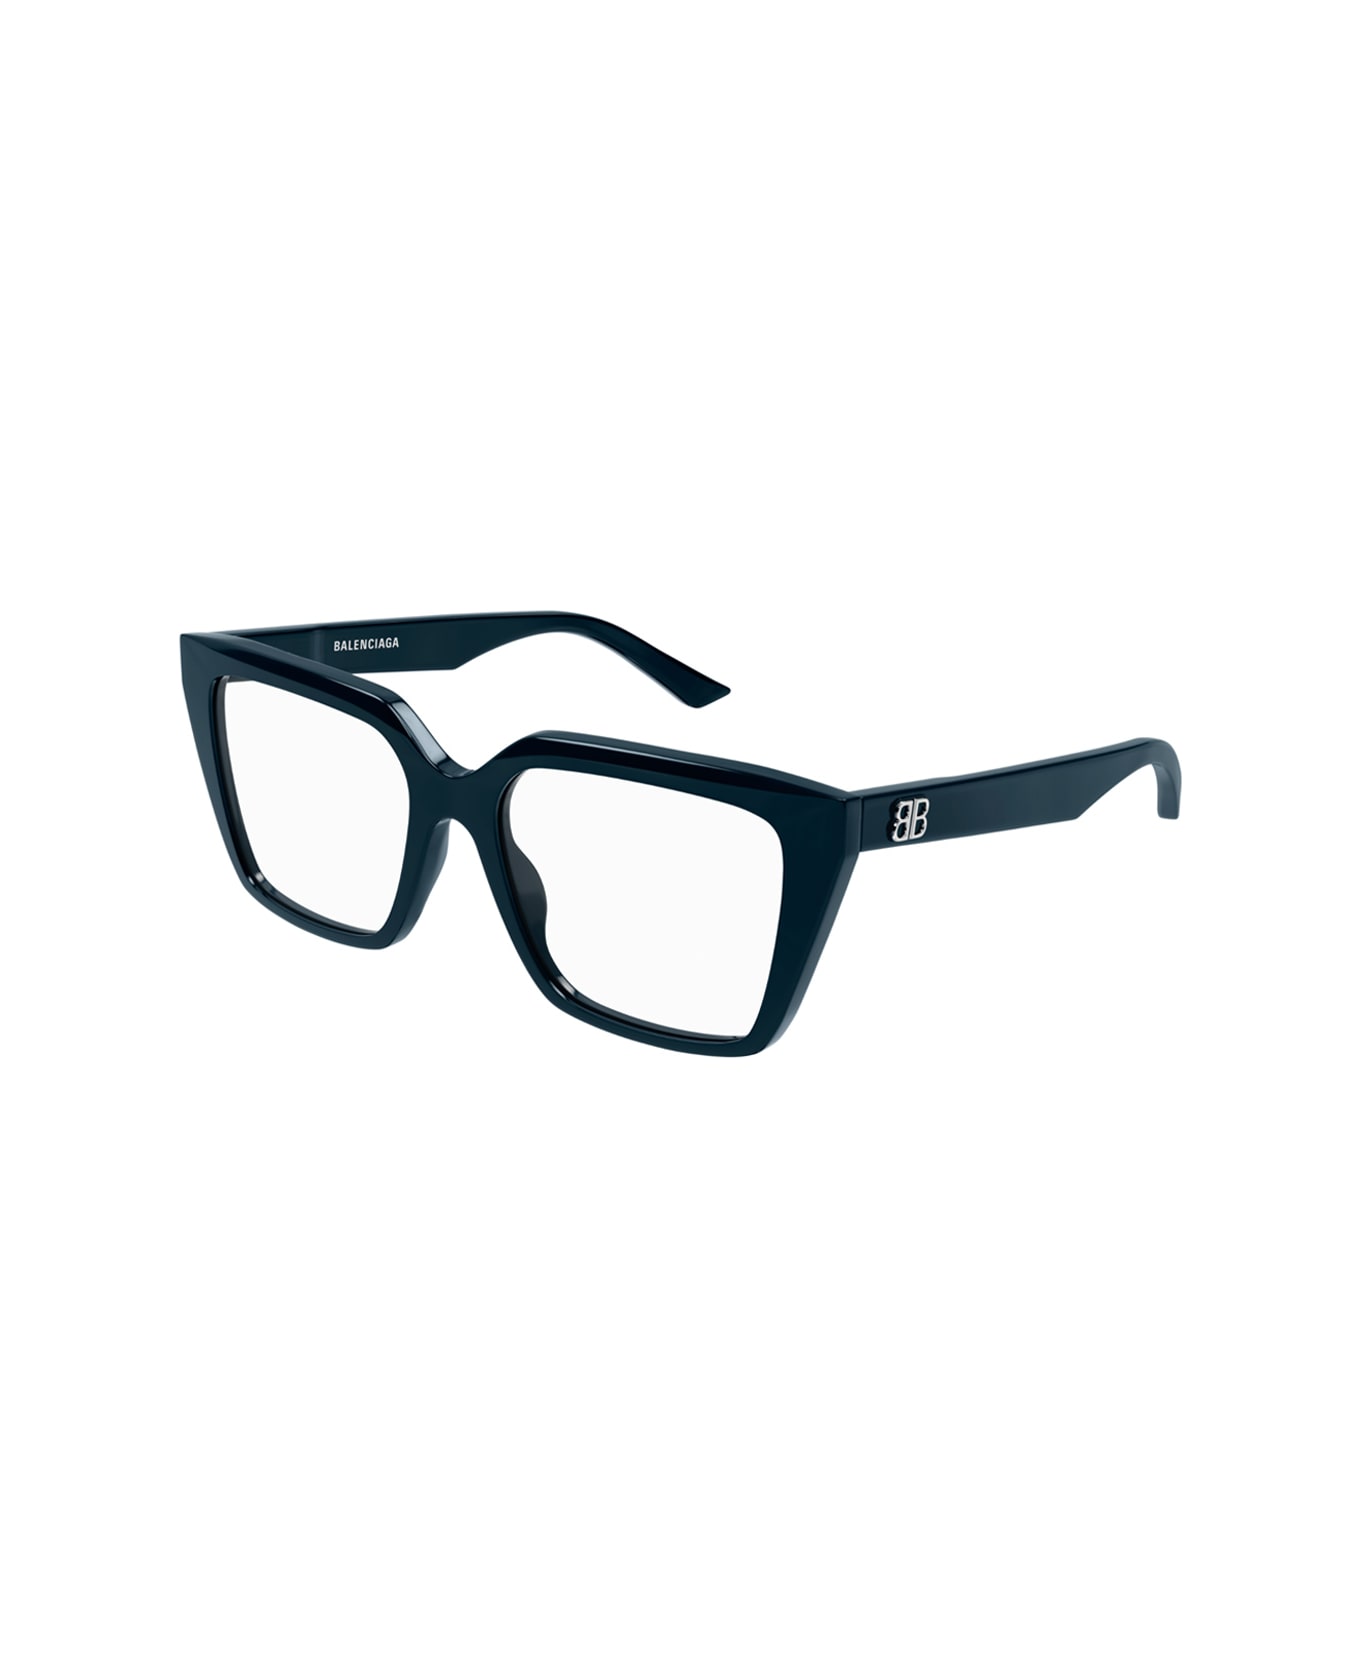 Balenciaga Eyewear Bb0130o Linea Everyday 010 Glasses - Blu アイウェア